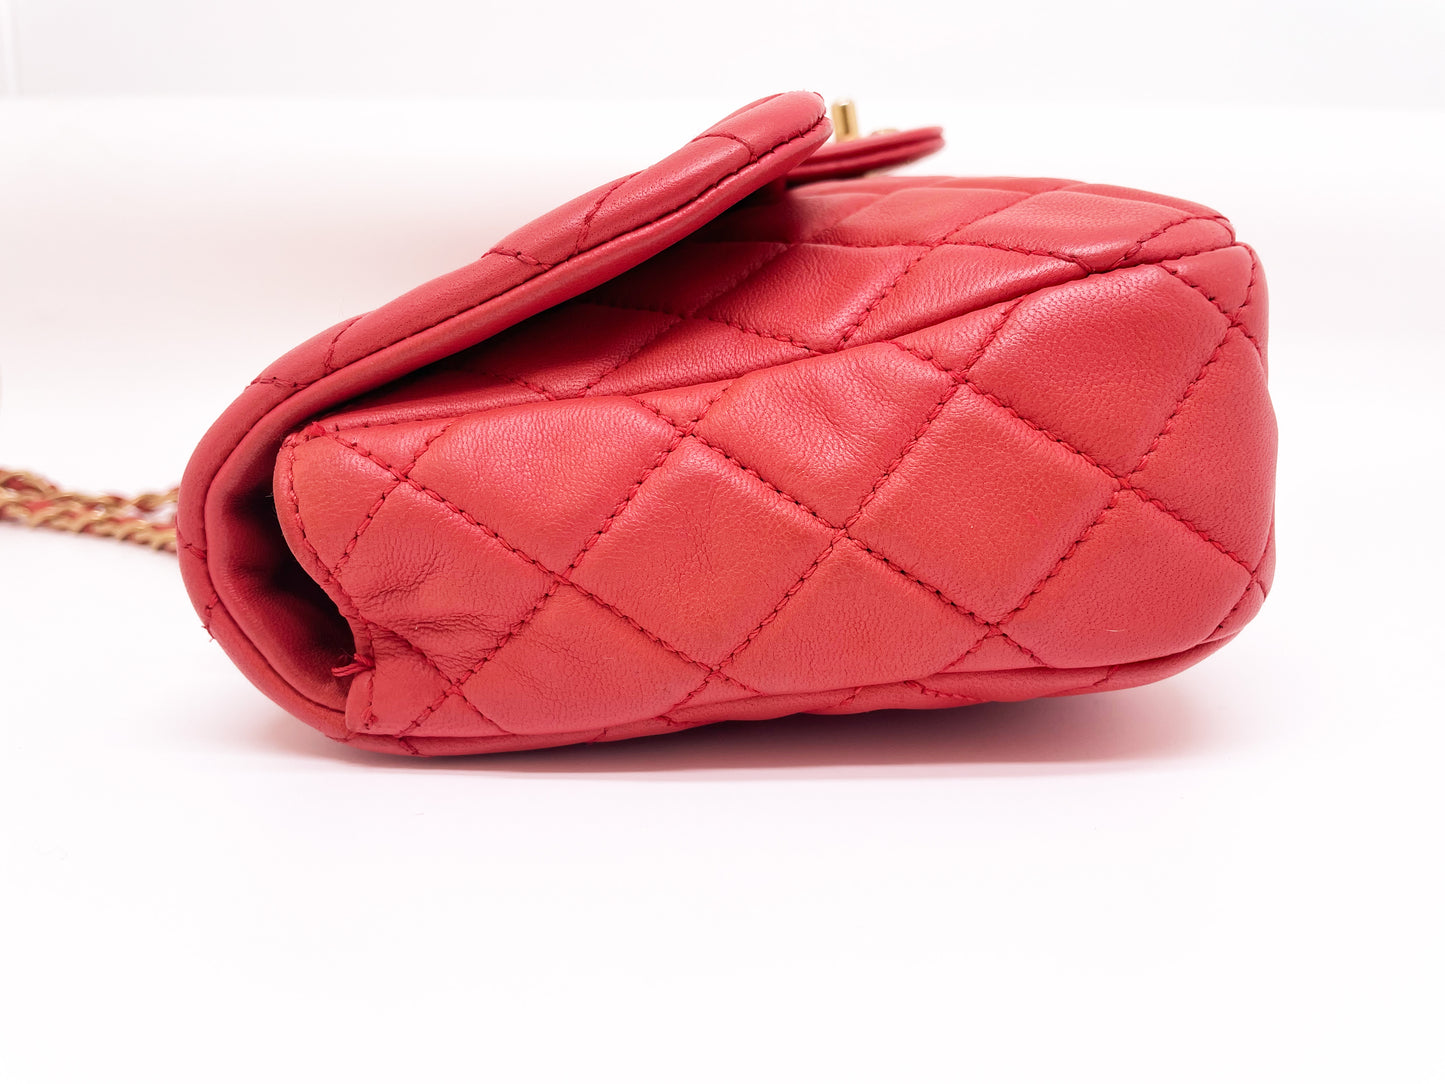 Magnifique Sac CHANEL en cuir Valentine Charm Strap Limited Edition Simple Rabat en rose